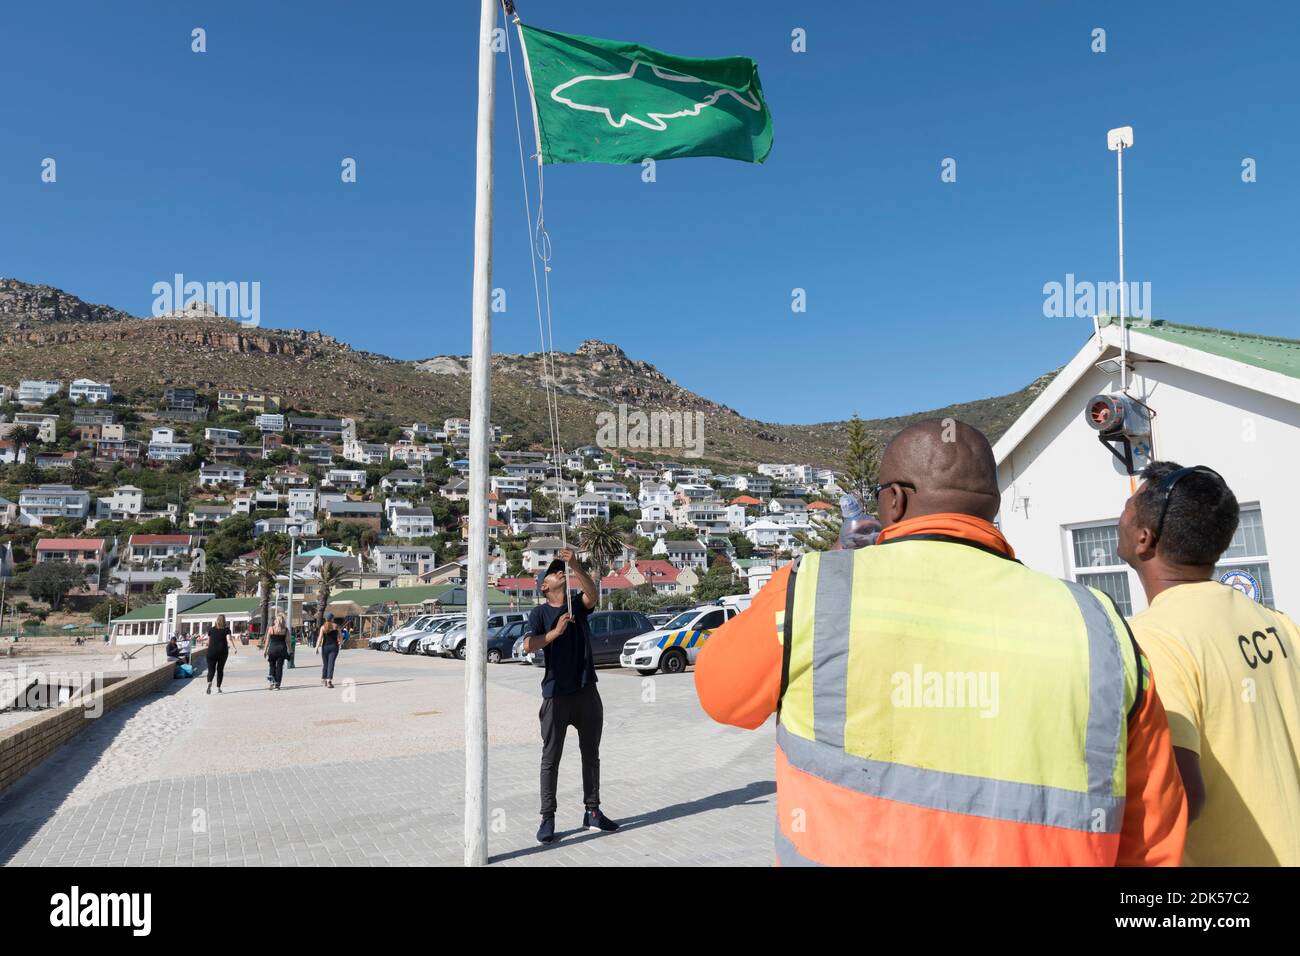 Shark Spotters employee raises green shark warning flag, Fish Hoek beach, Cape Town. Green flag = good spotting conditions, no sharks visible. Stock Photo